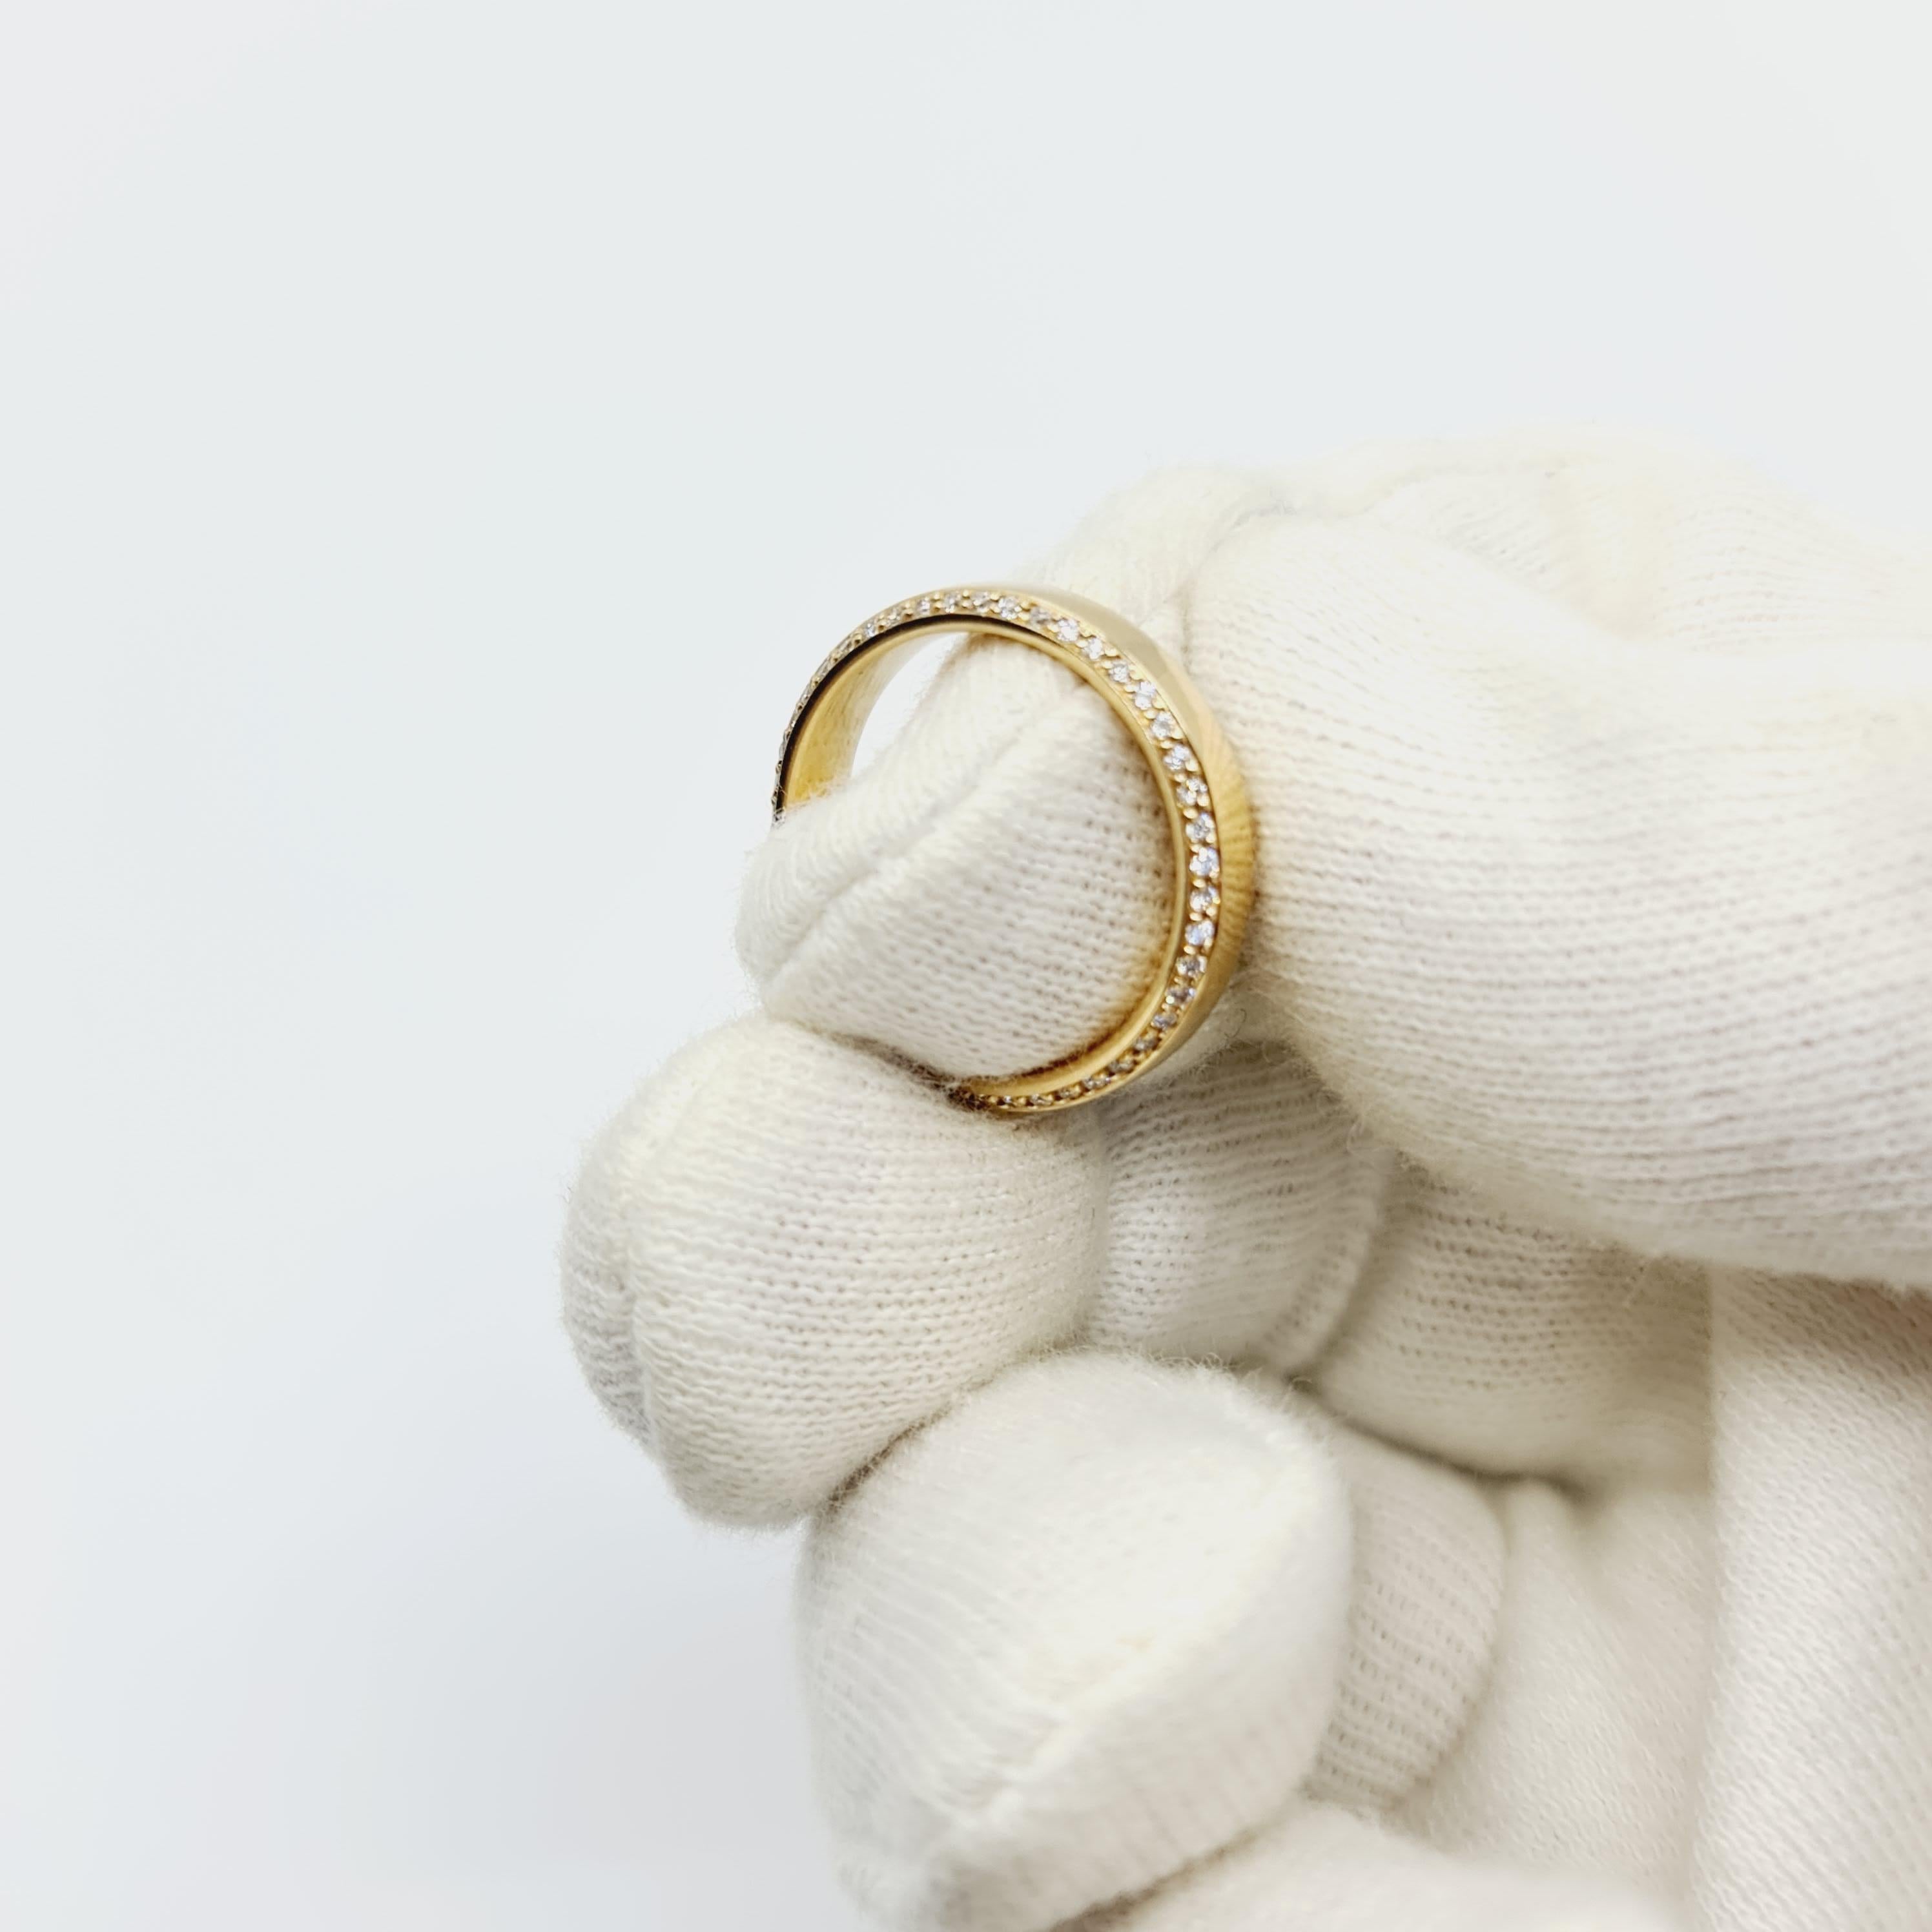 0.23 Carat Diamond Ring G/VS 14k Gold, Brilliant Cut Pave Diamonds For Sale 4